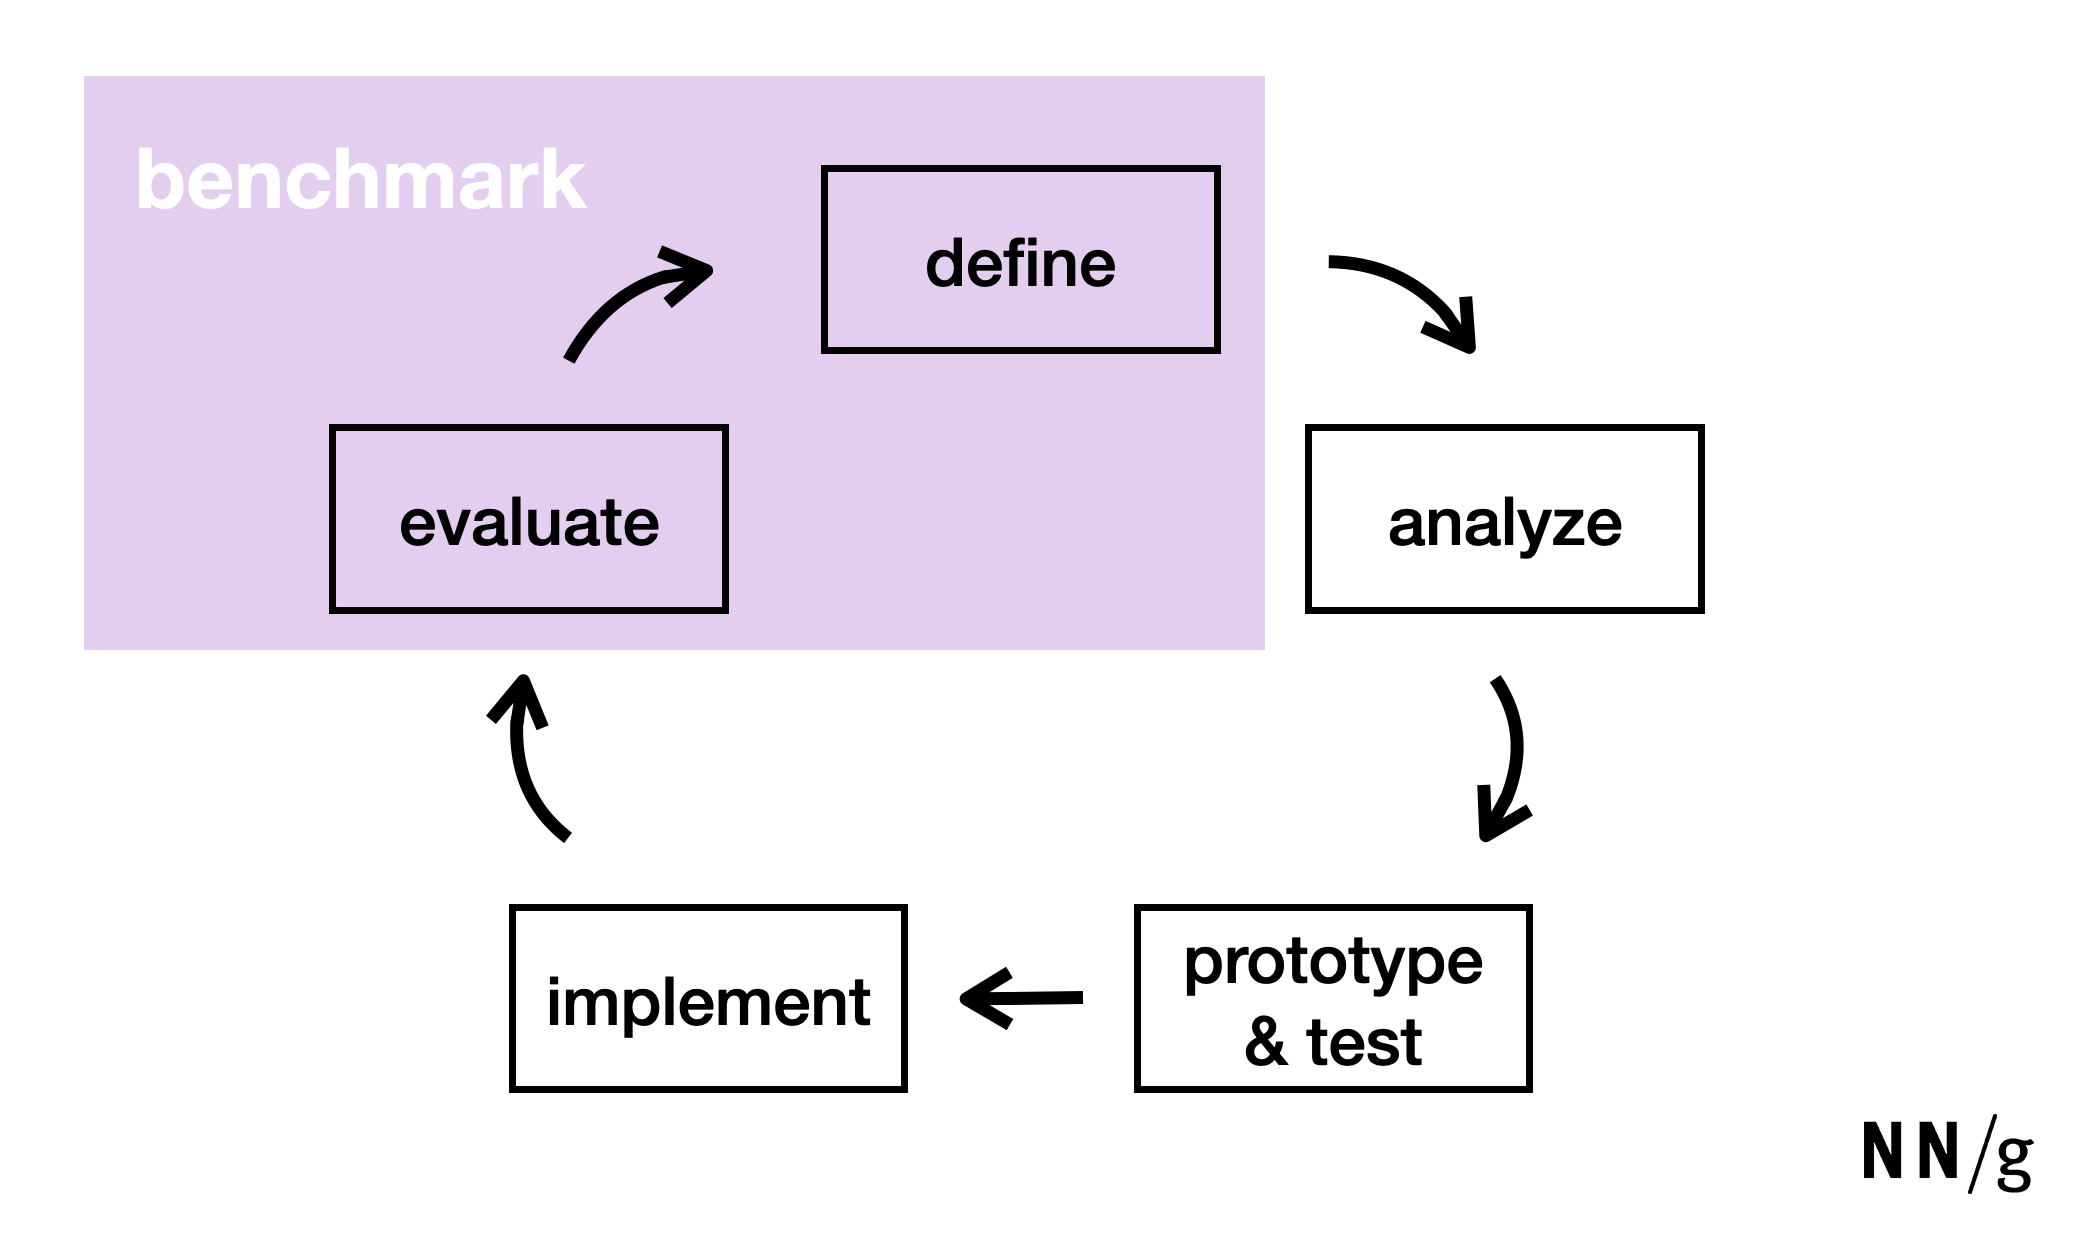 Benchmarking happens between evaluate and define.